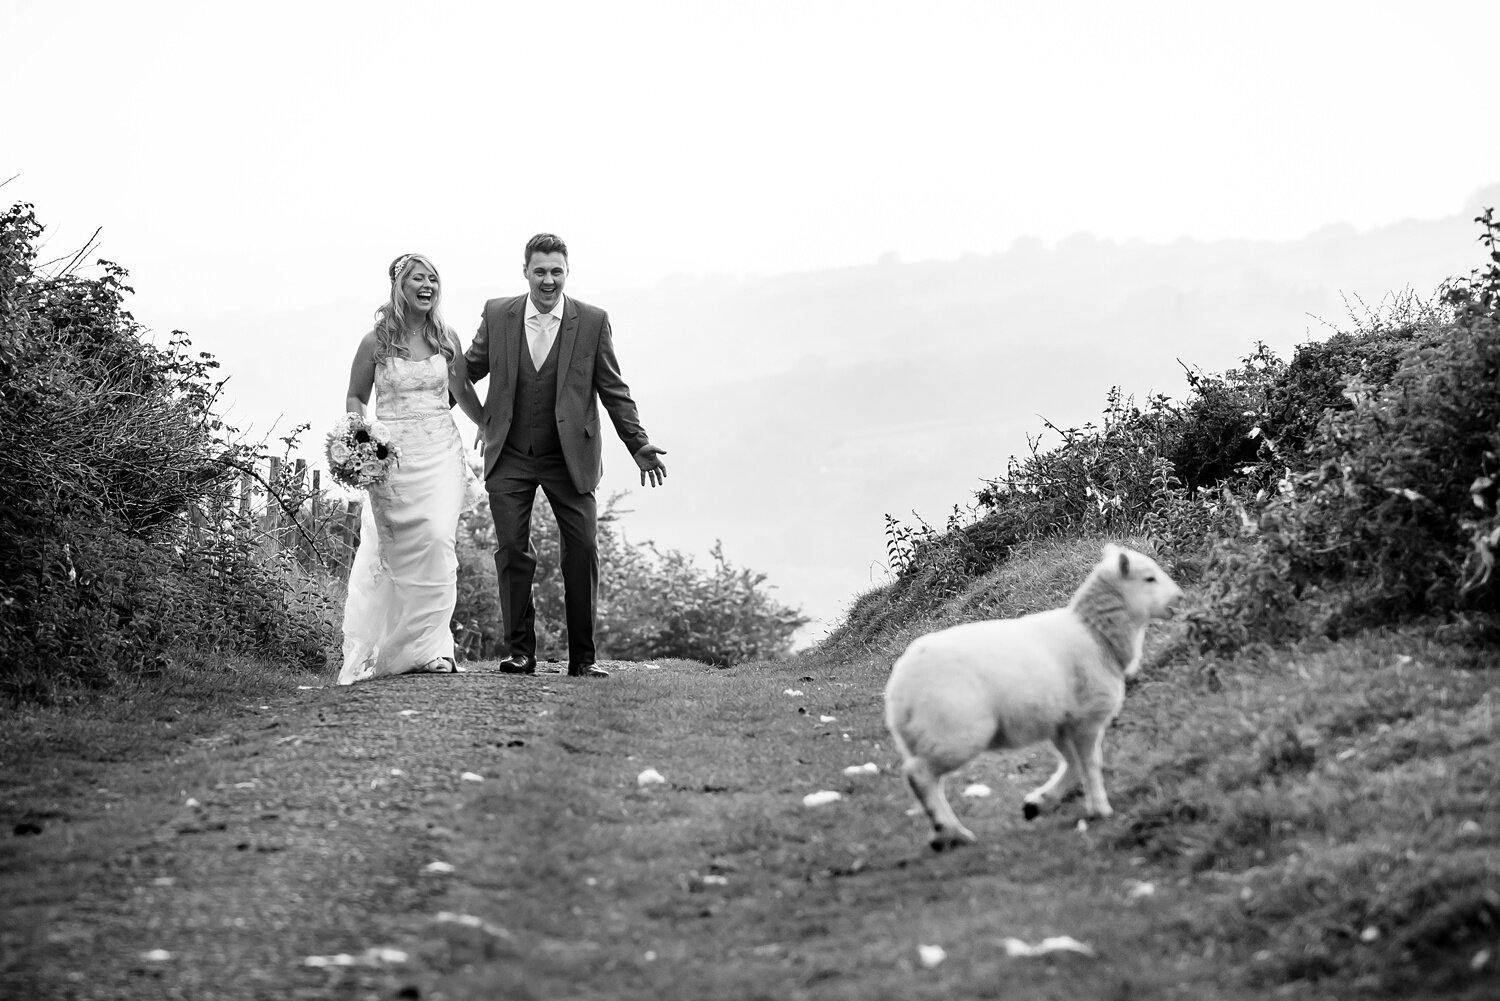 Wedding photos from Carreg Cennen Castle